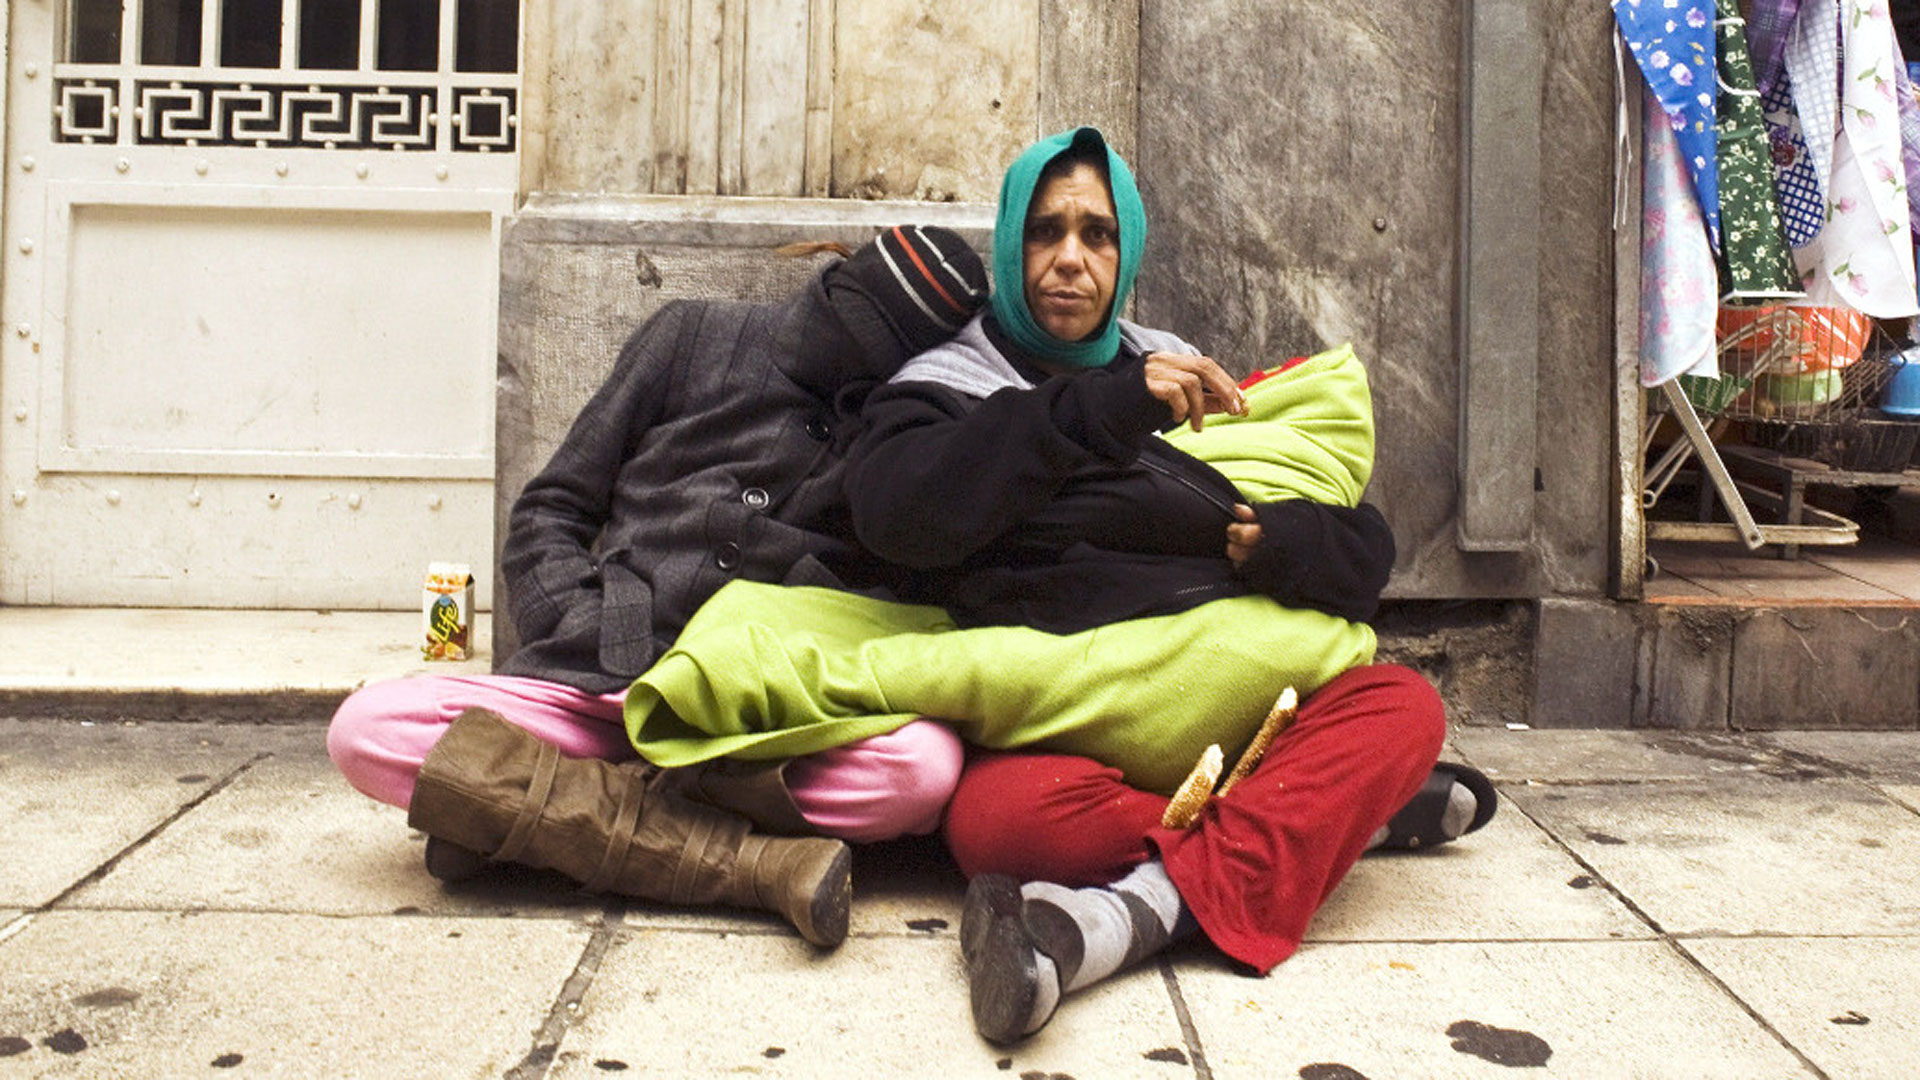 Homelessness in Greece